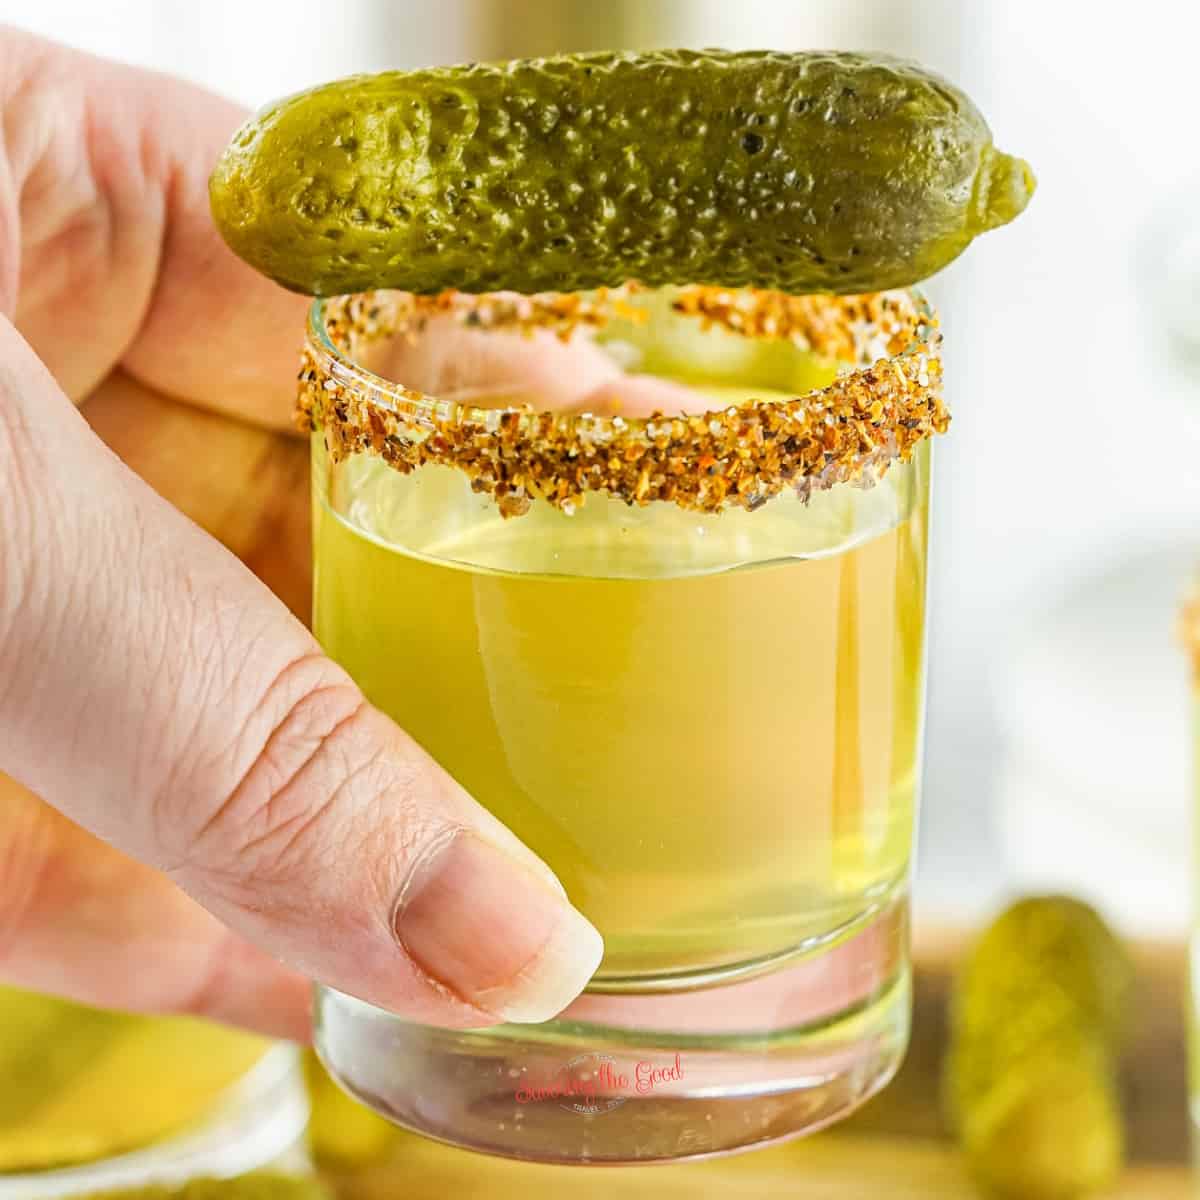 Pickle shot with mini pickle garnish, seasoned rim.